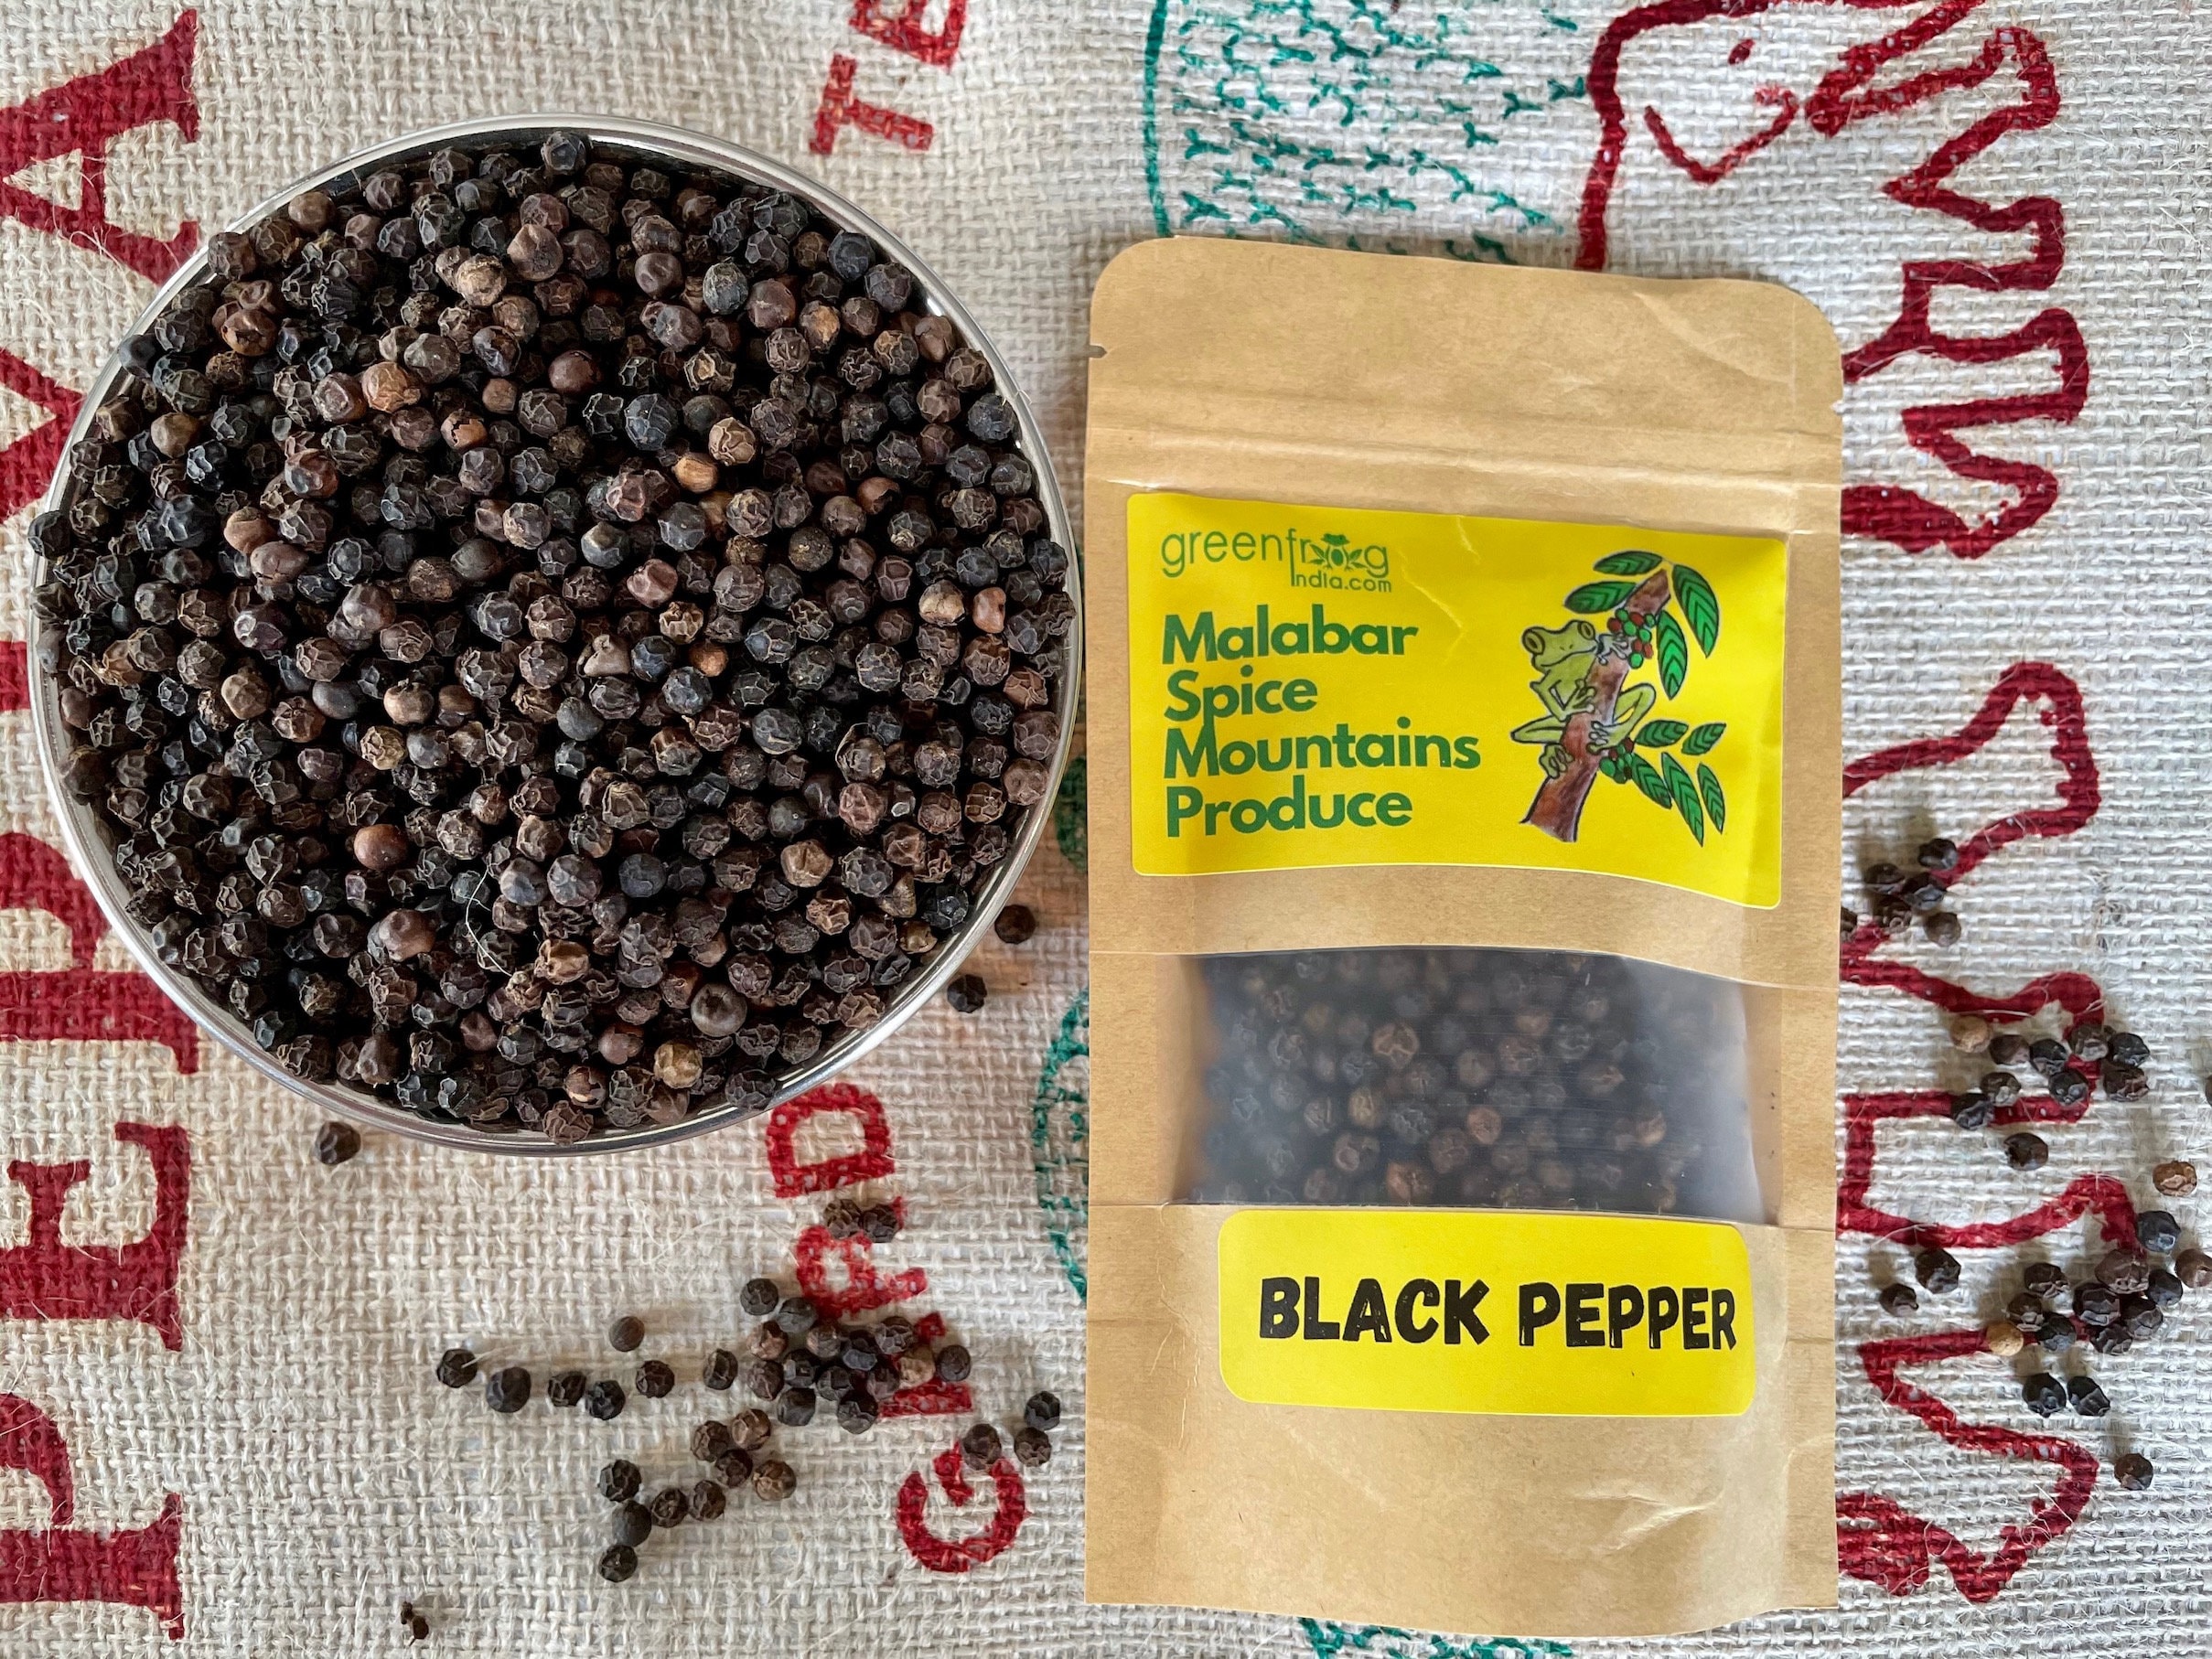 Tellicherry Black Peppercorns Certified Organic (8 oz)